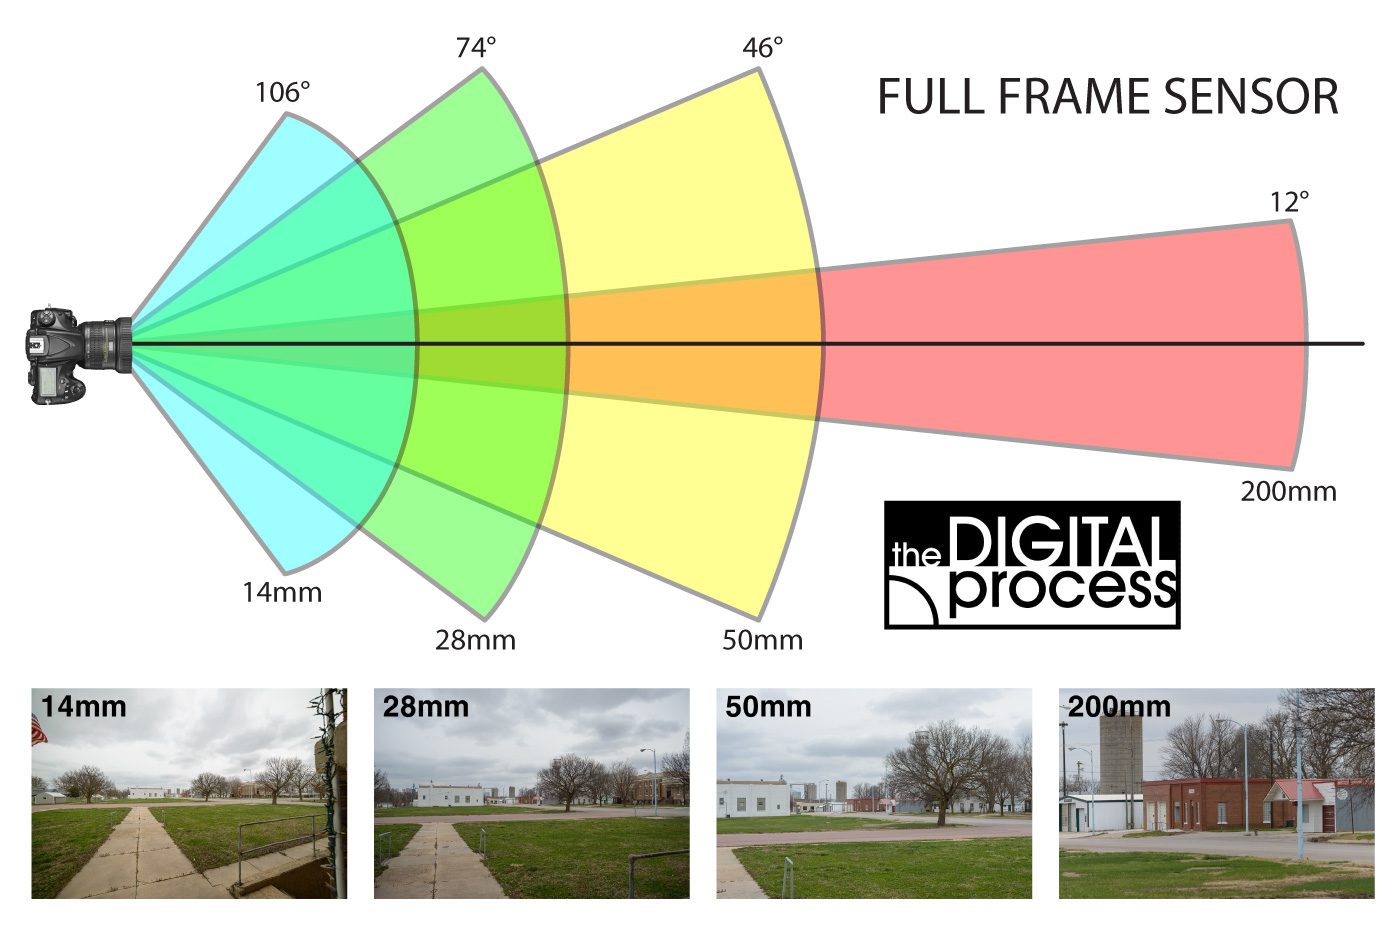 Camera Lens Angle Of View Chart